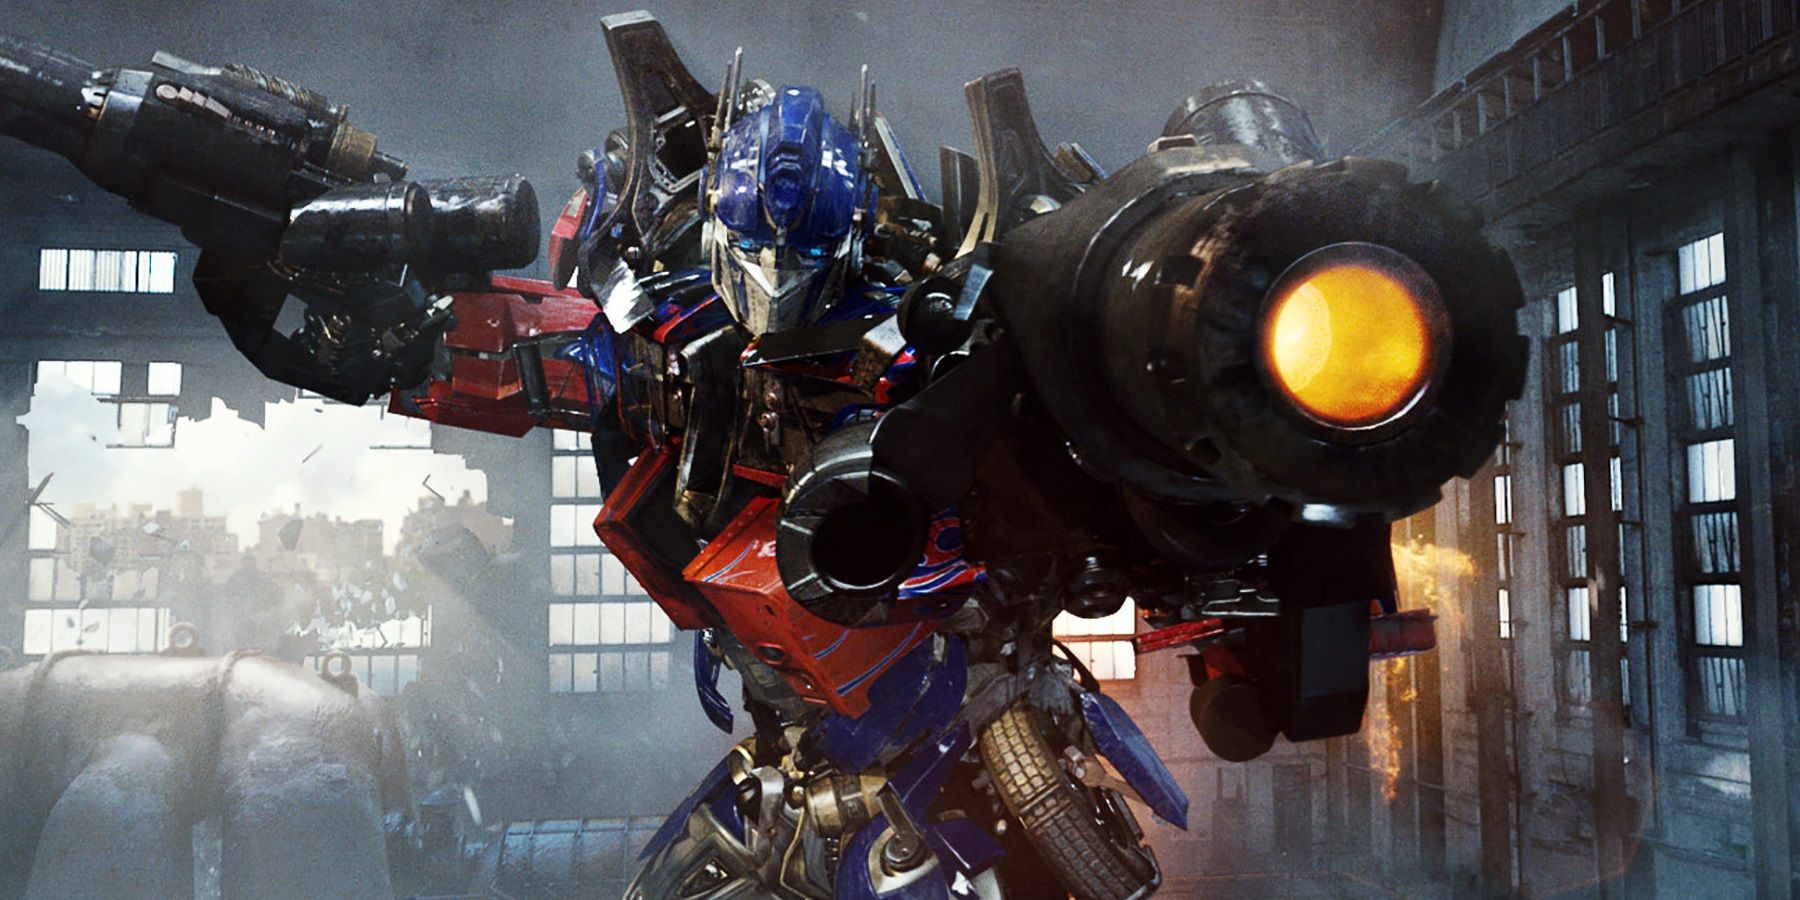 Optimus Prime aiming his gun in Transformers Revenge of the Fallen